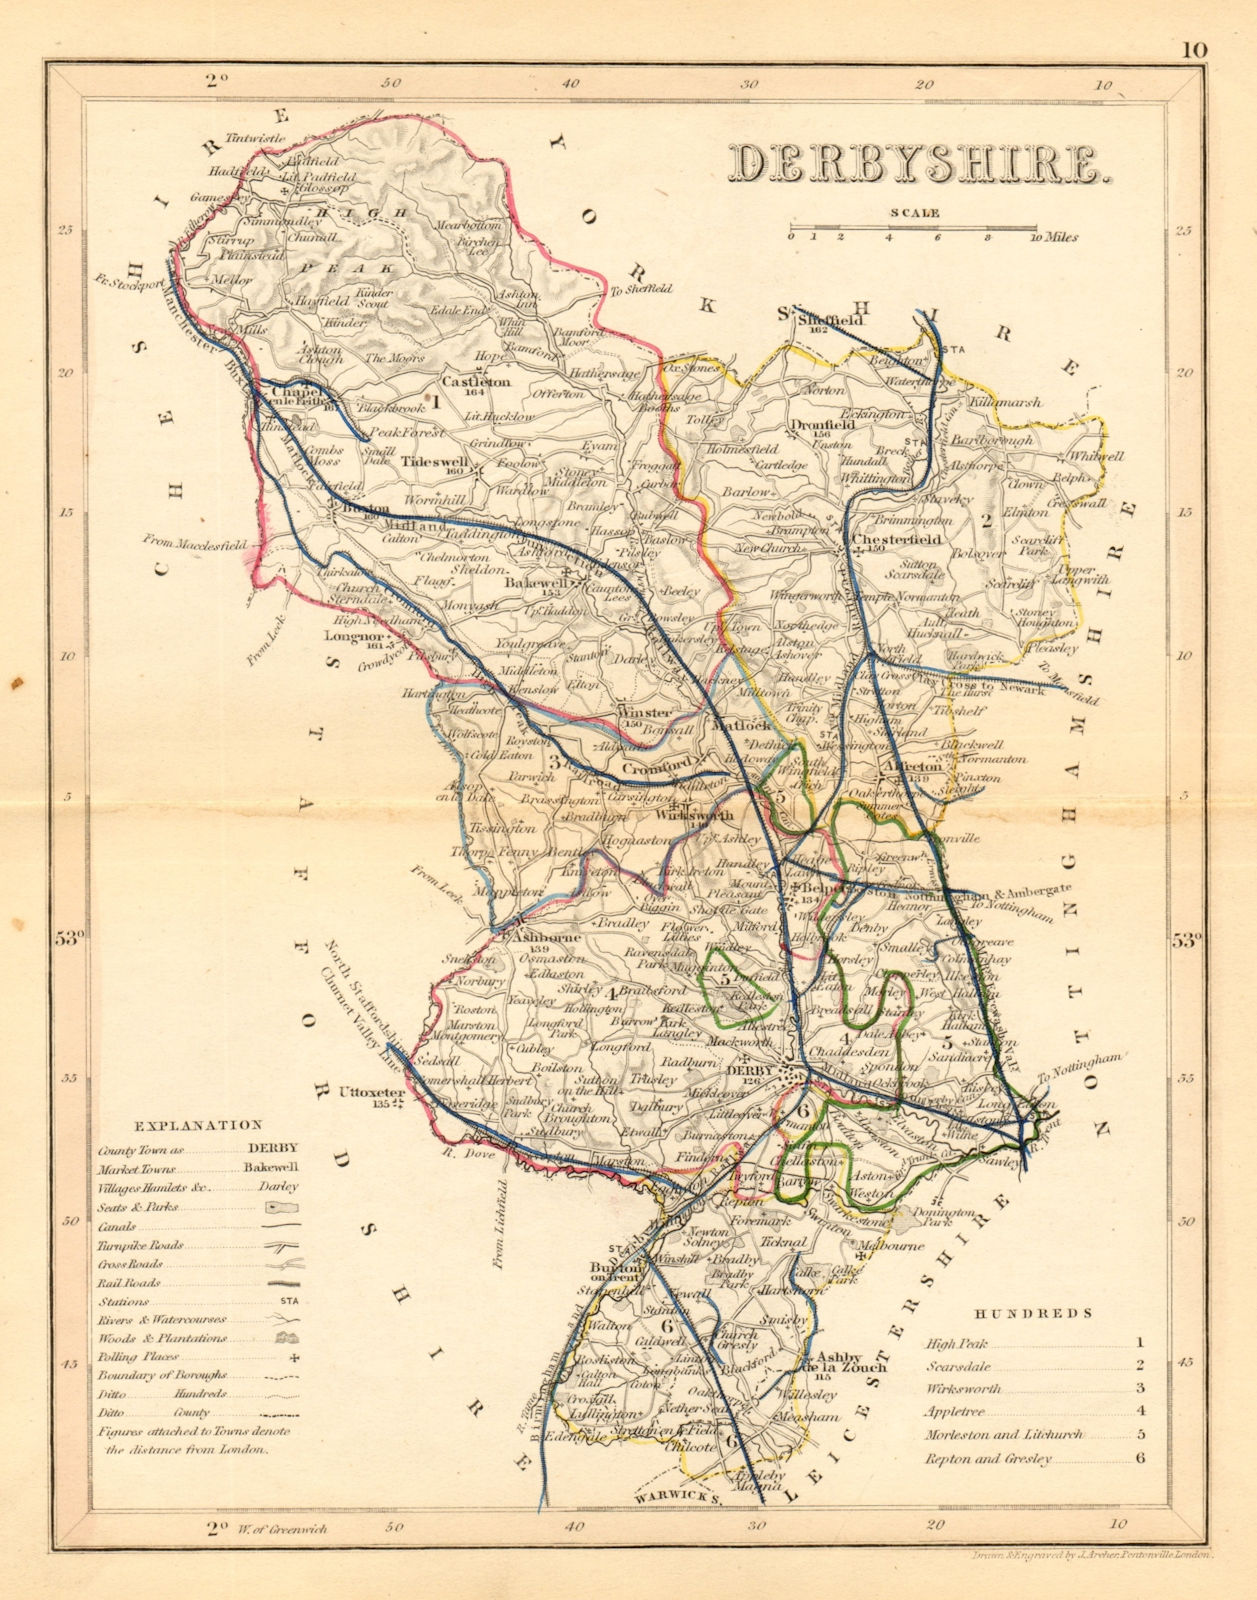 DERBYSHIRE county map by ARCHER & DUGDALE. Peak District. Polling places 1845